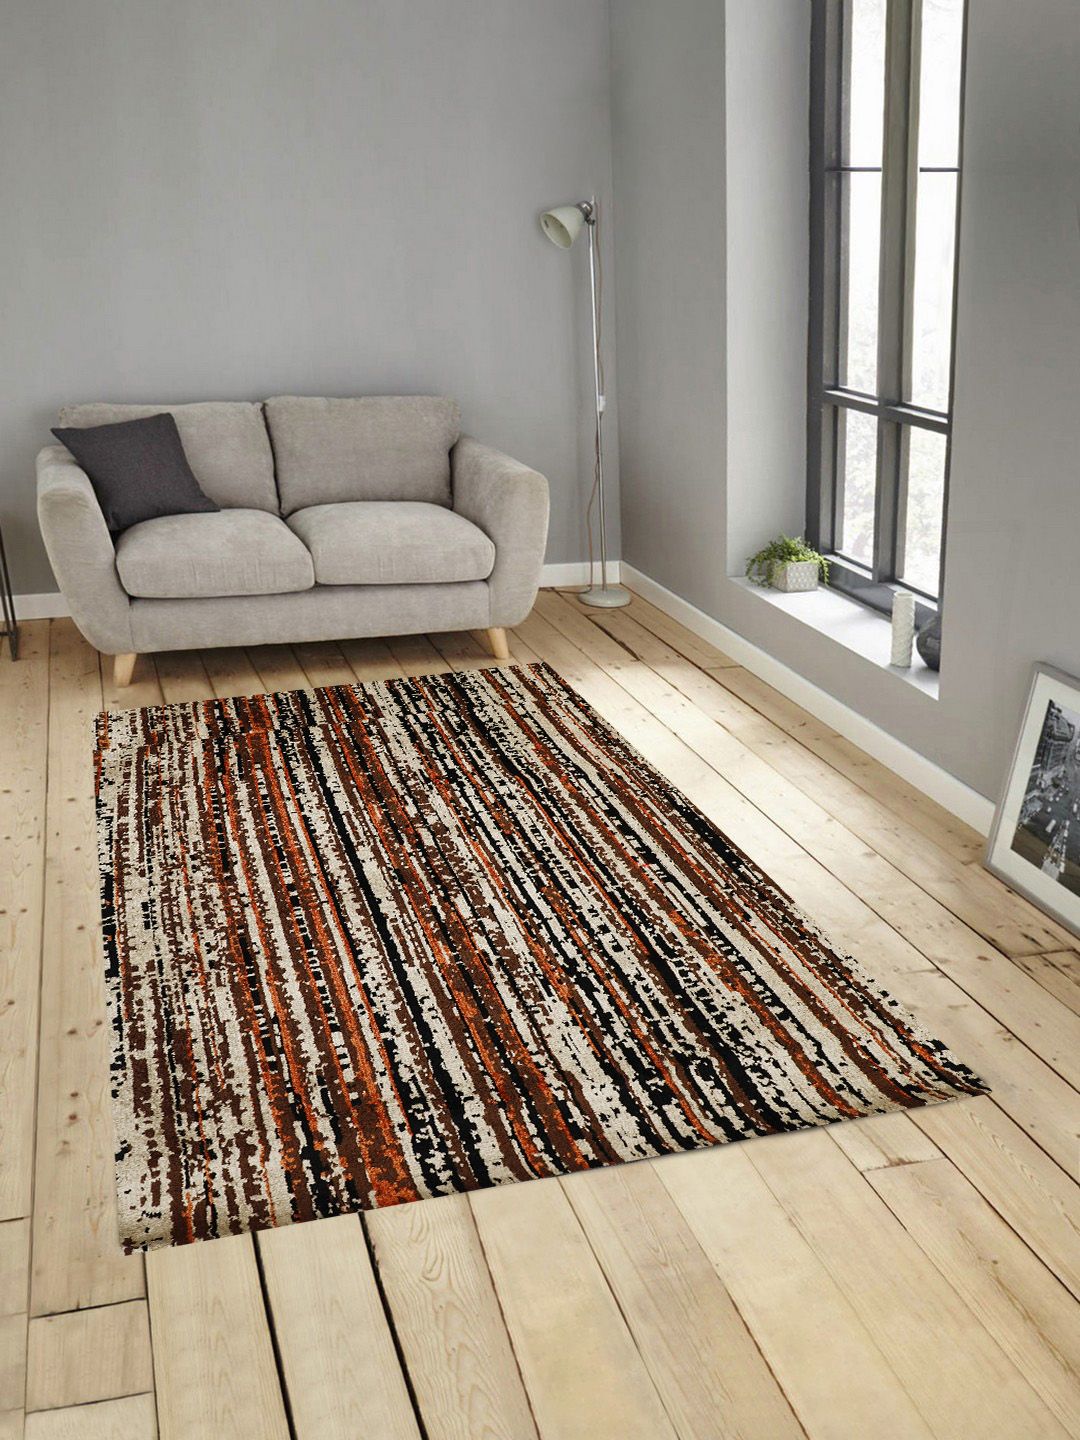 PRESTO Beige & Brown Striped Anti-Skid Carpet Price in India